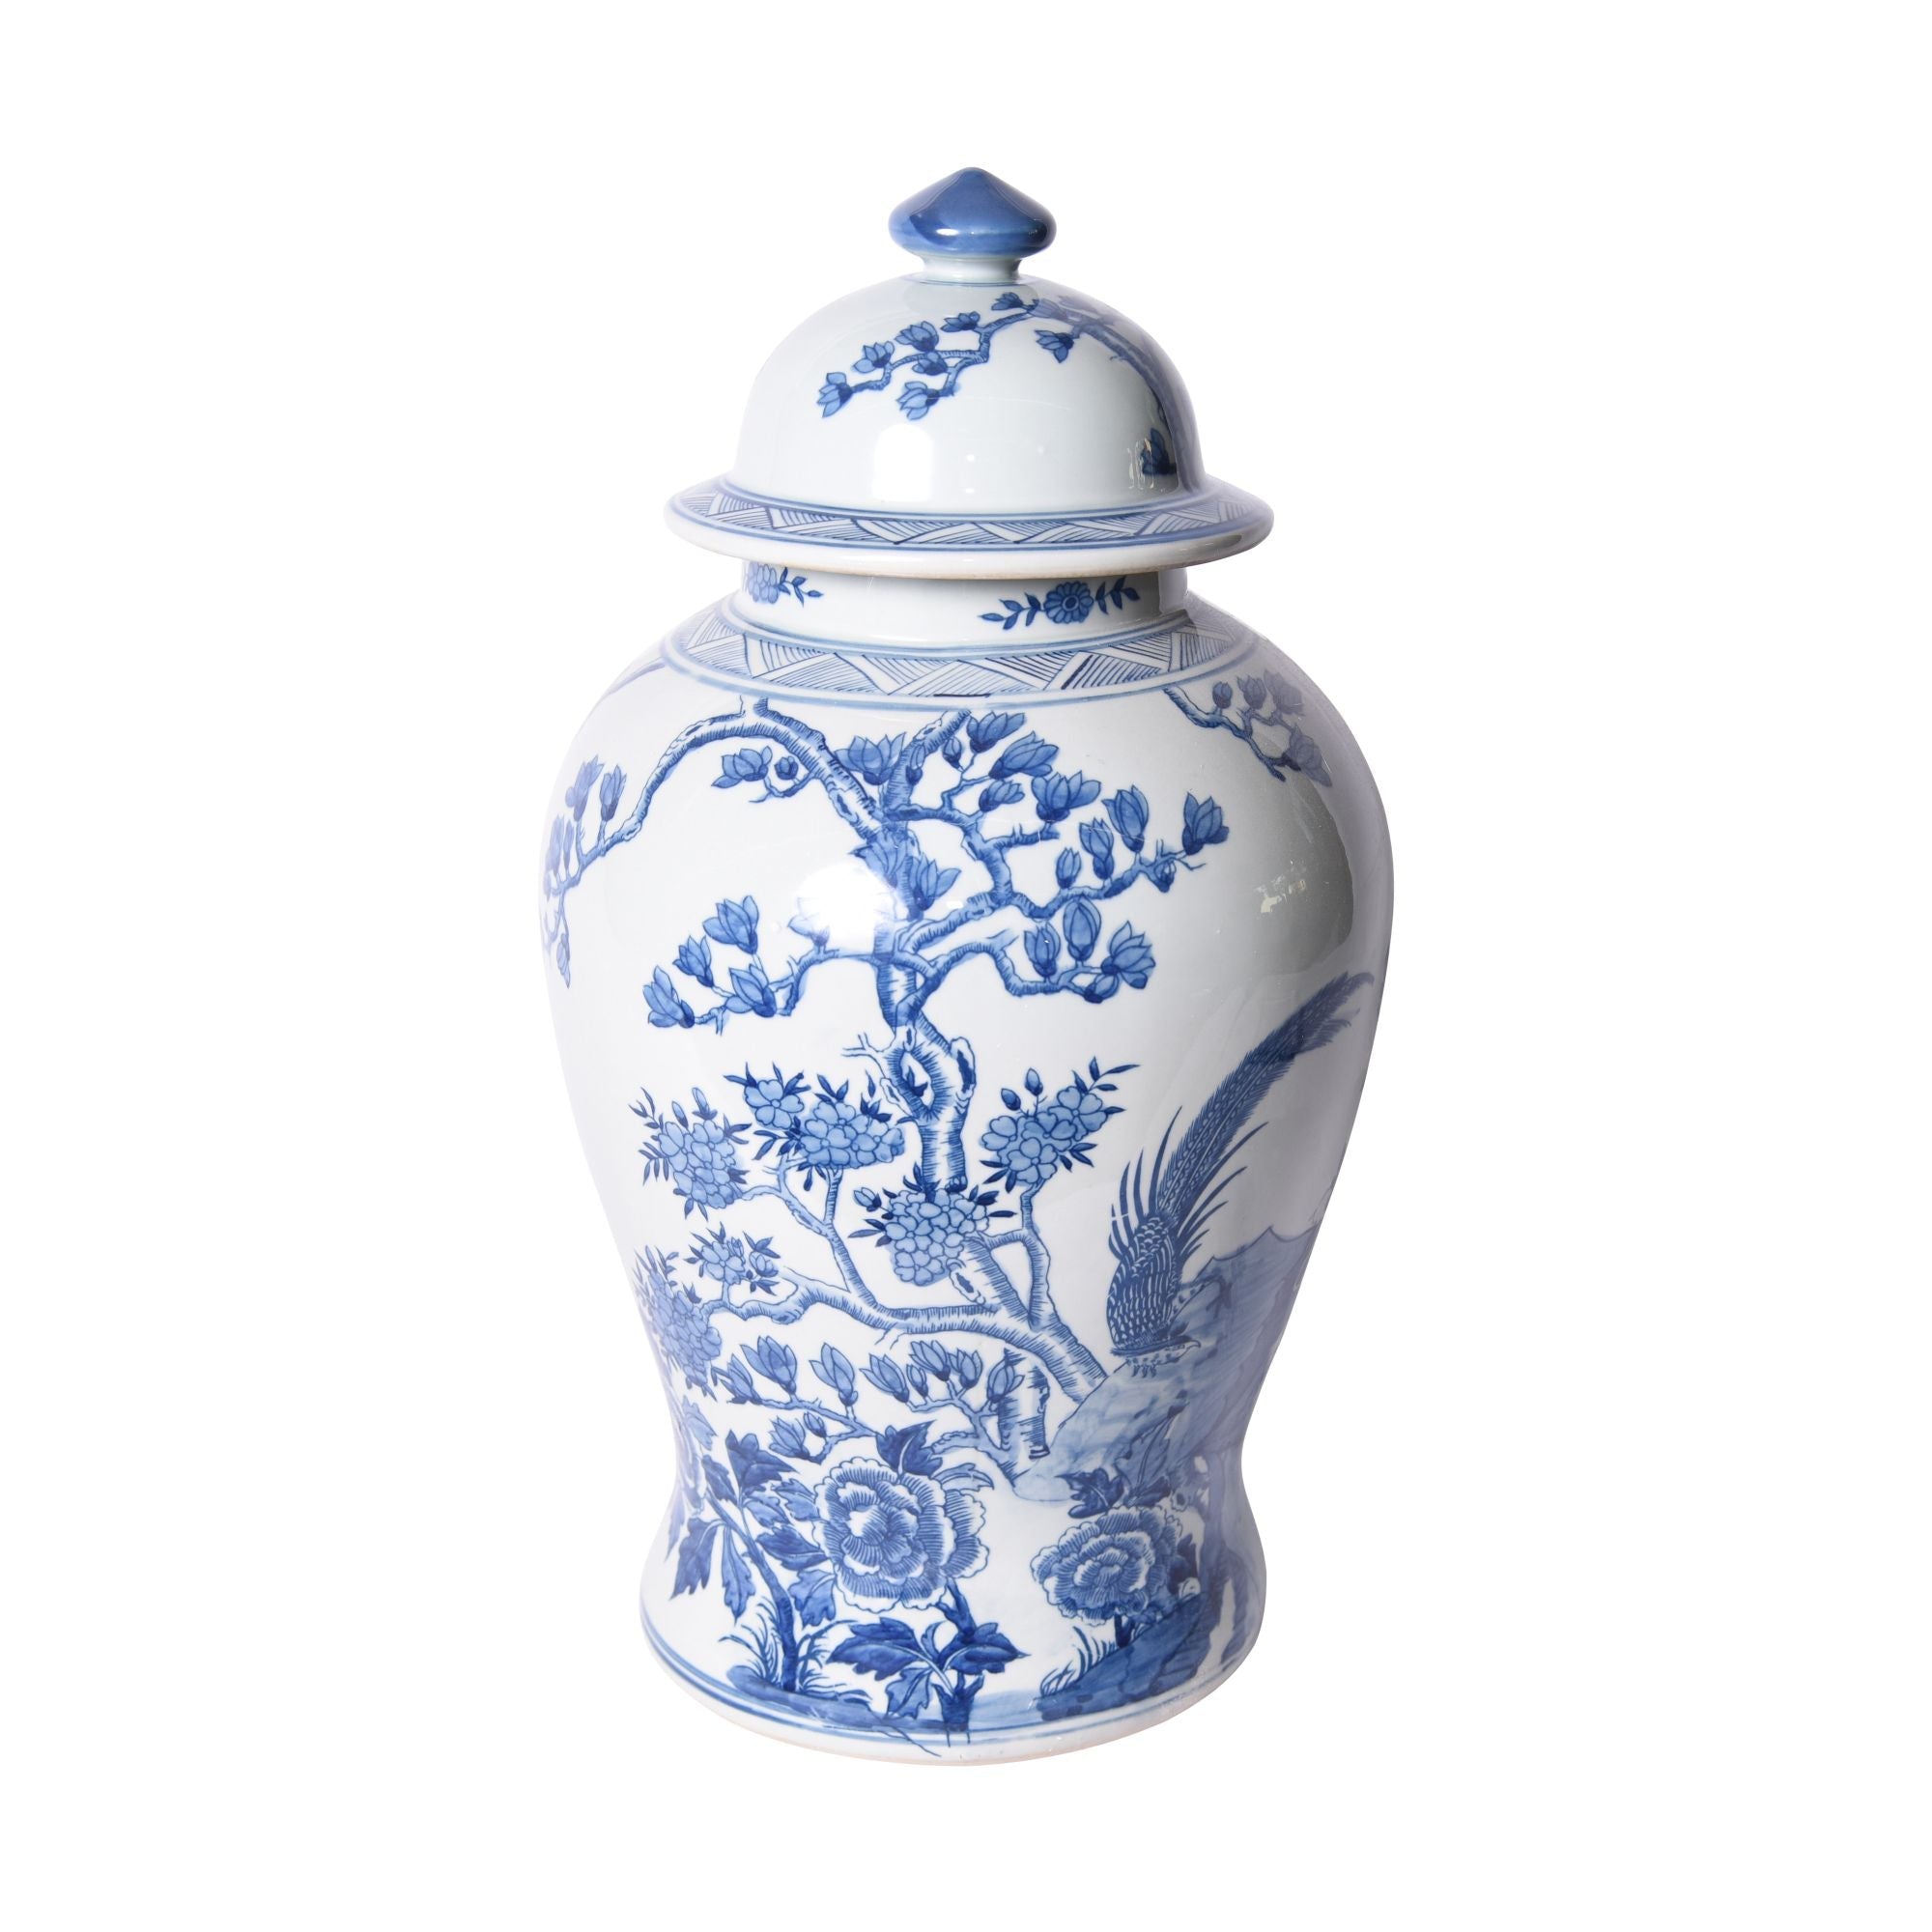 Legend of Asia Giftware Legend of Asia B&W Magnolia Pheasant Porcelain Temple Jar